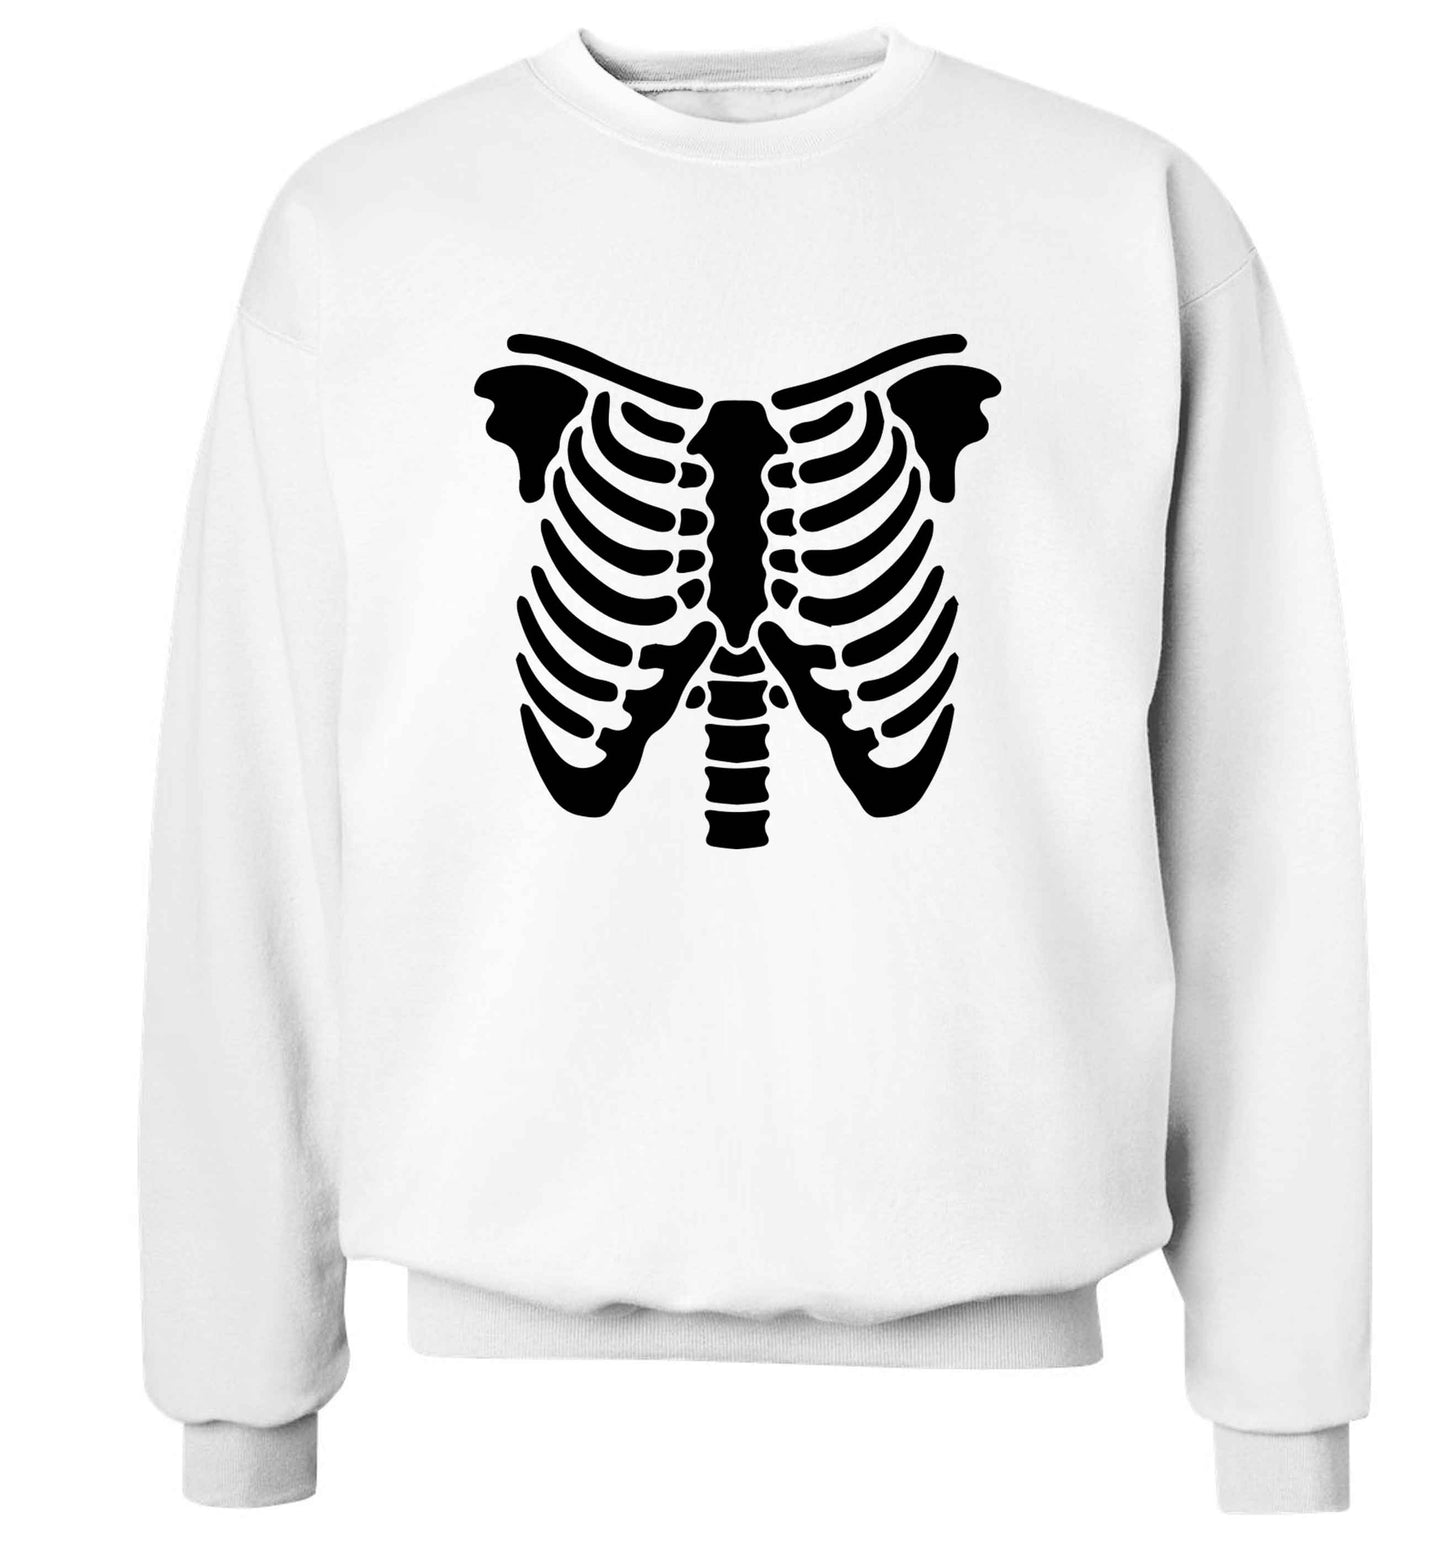 Skeleton ribcage adult's unisex white sweater 2XL